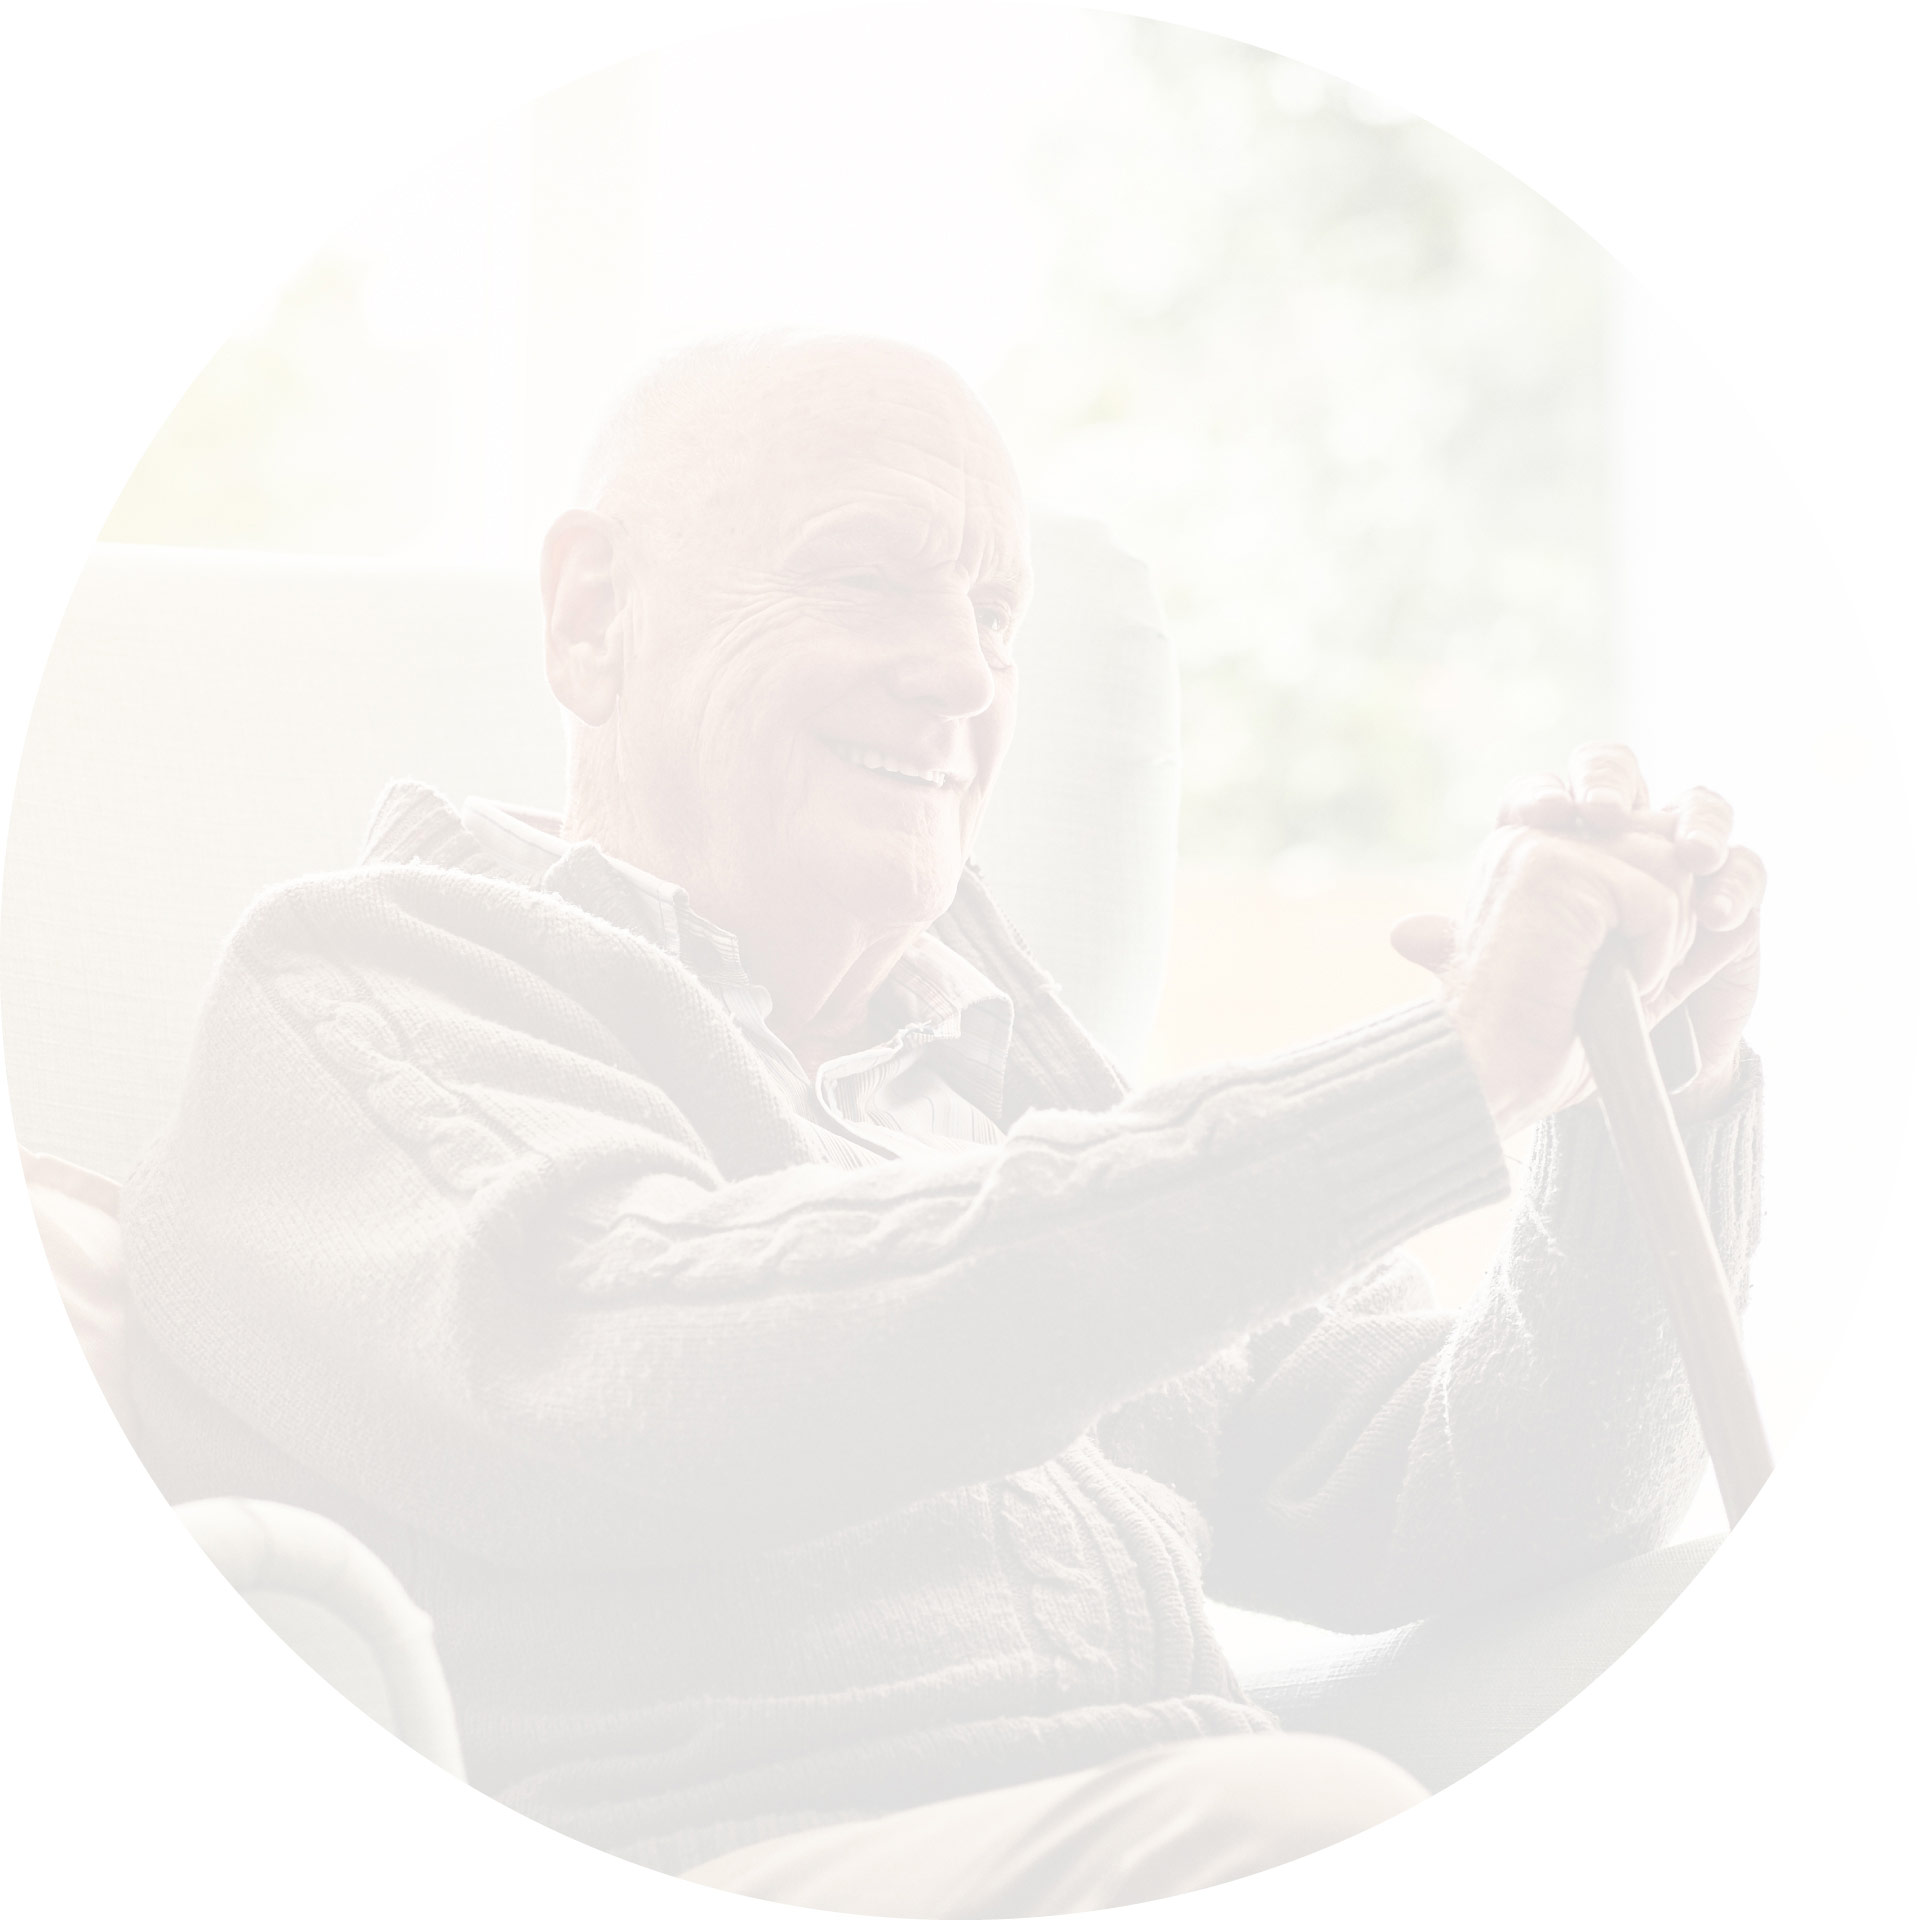 An elderly man enjoying the independence of having homecare